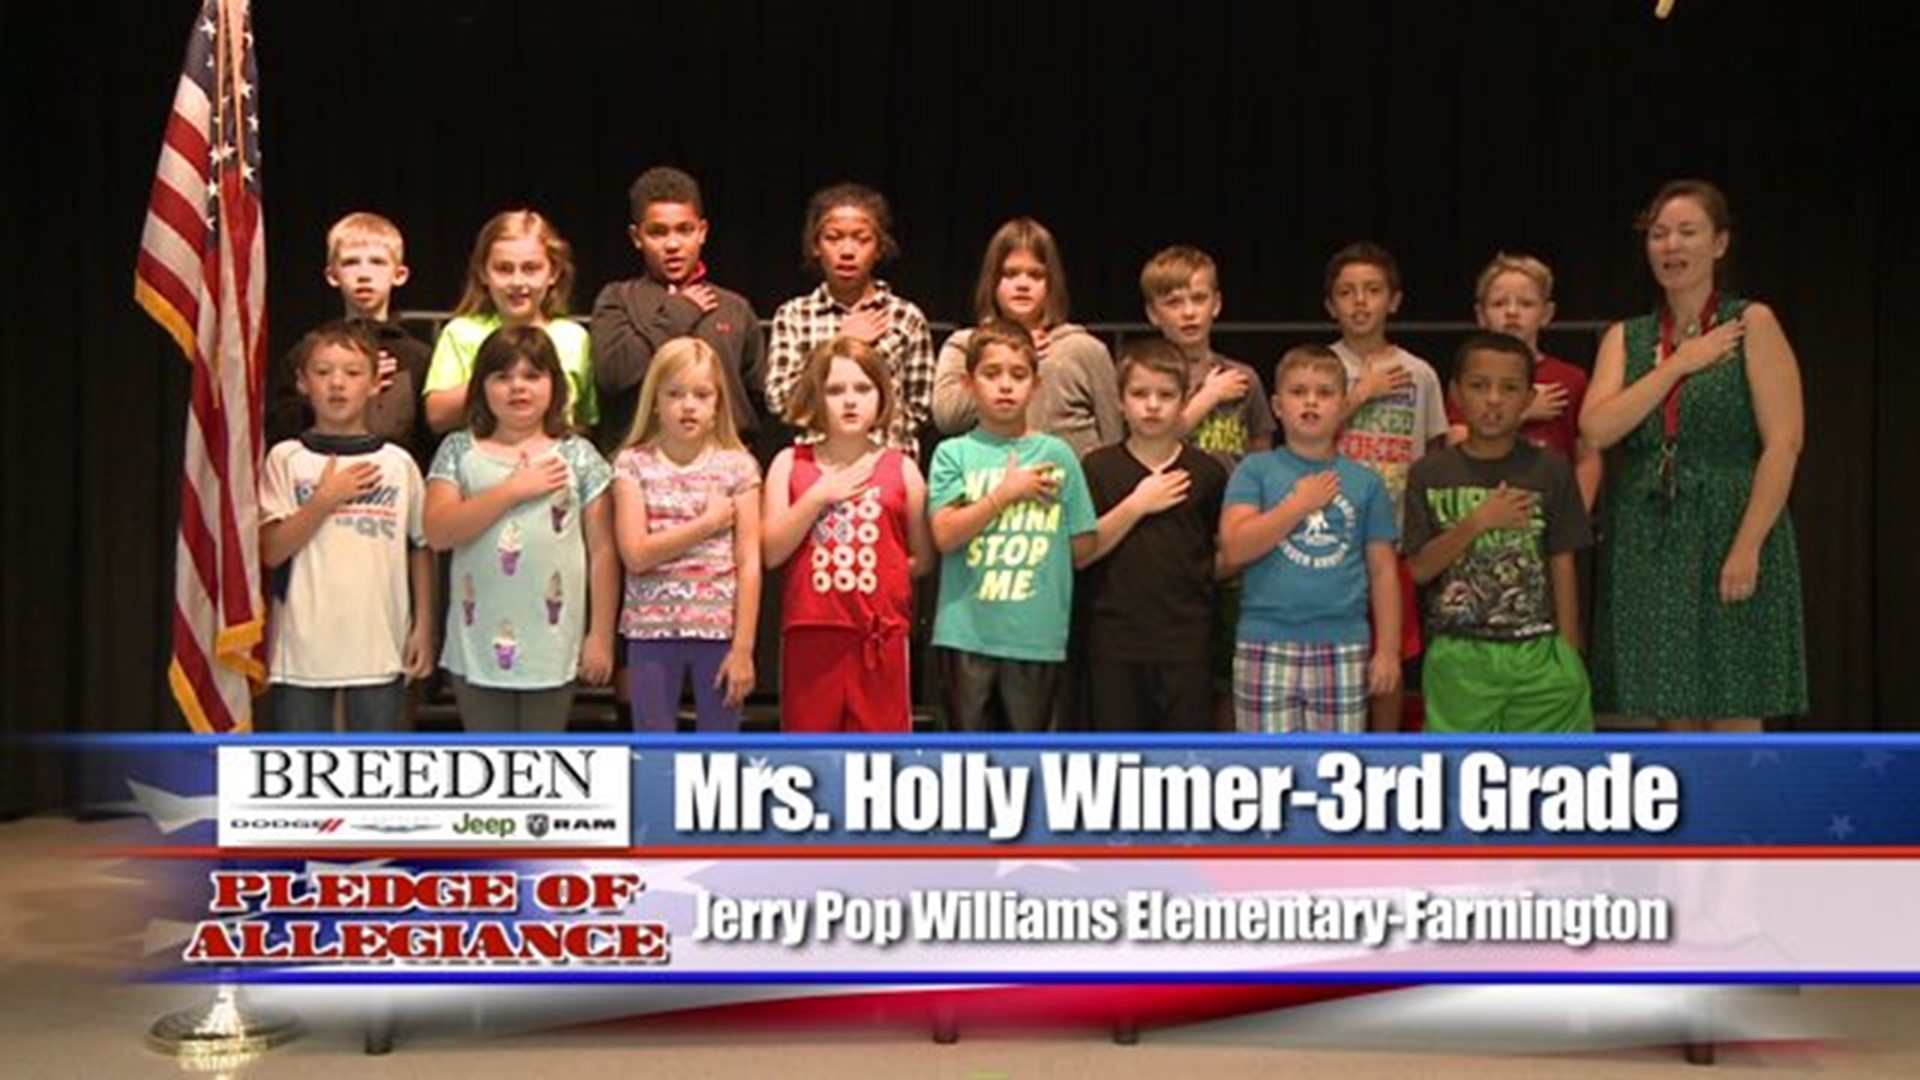 Jerry Pop Williams Elementary - Farmington - Mrs. Holly Wimer - 3rd Grade